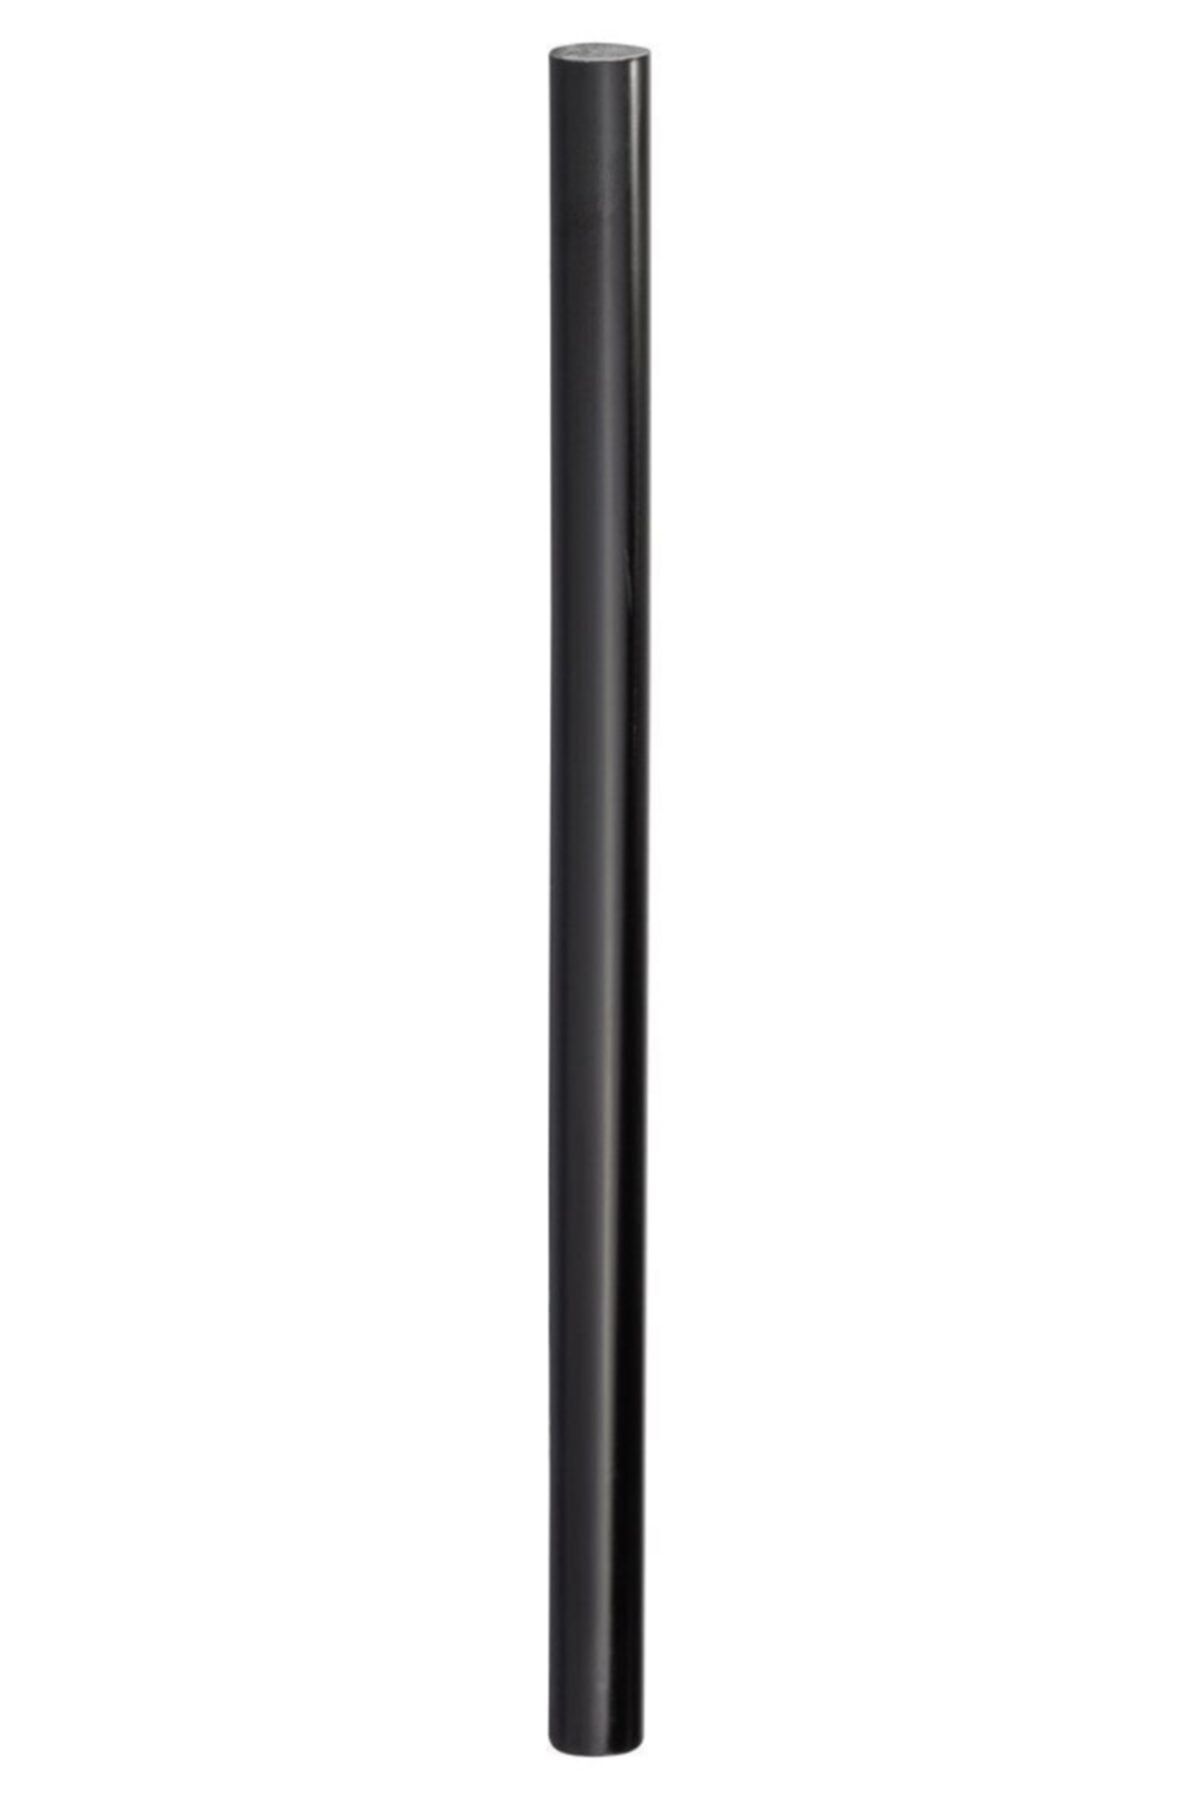 Bosch - Tutkal Çubuğu Siyah 11*200 Mm 500 Gr